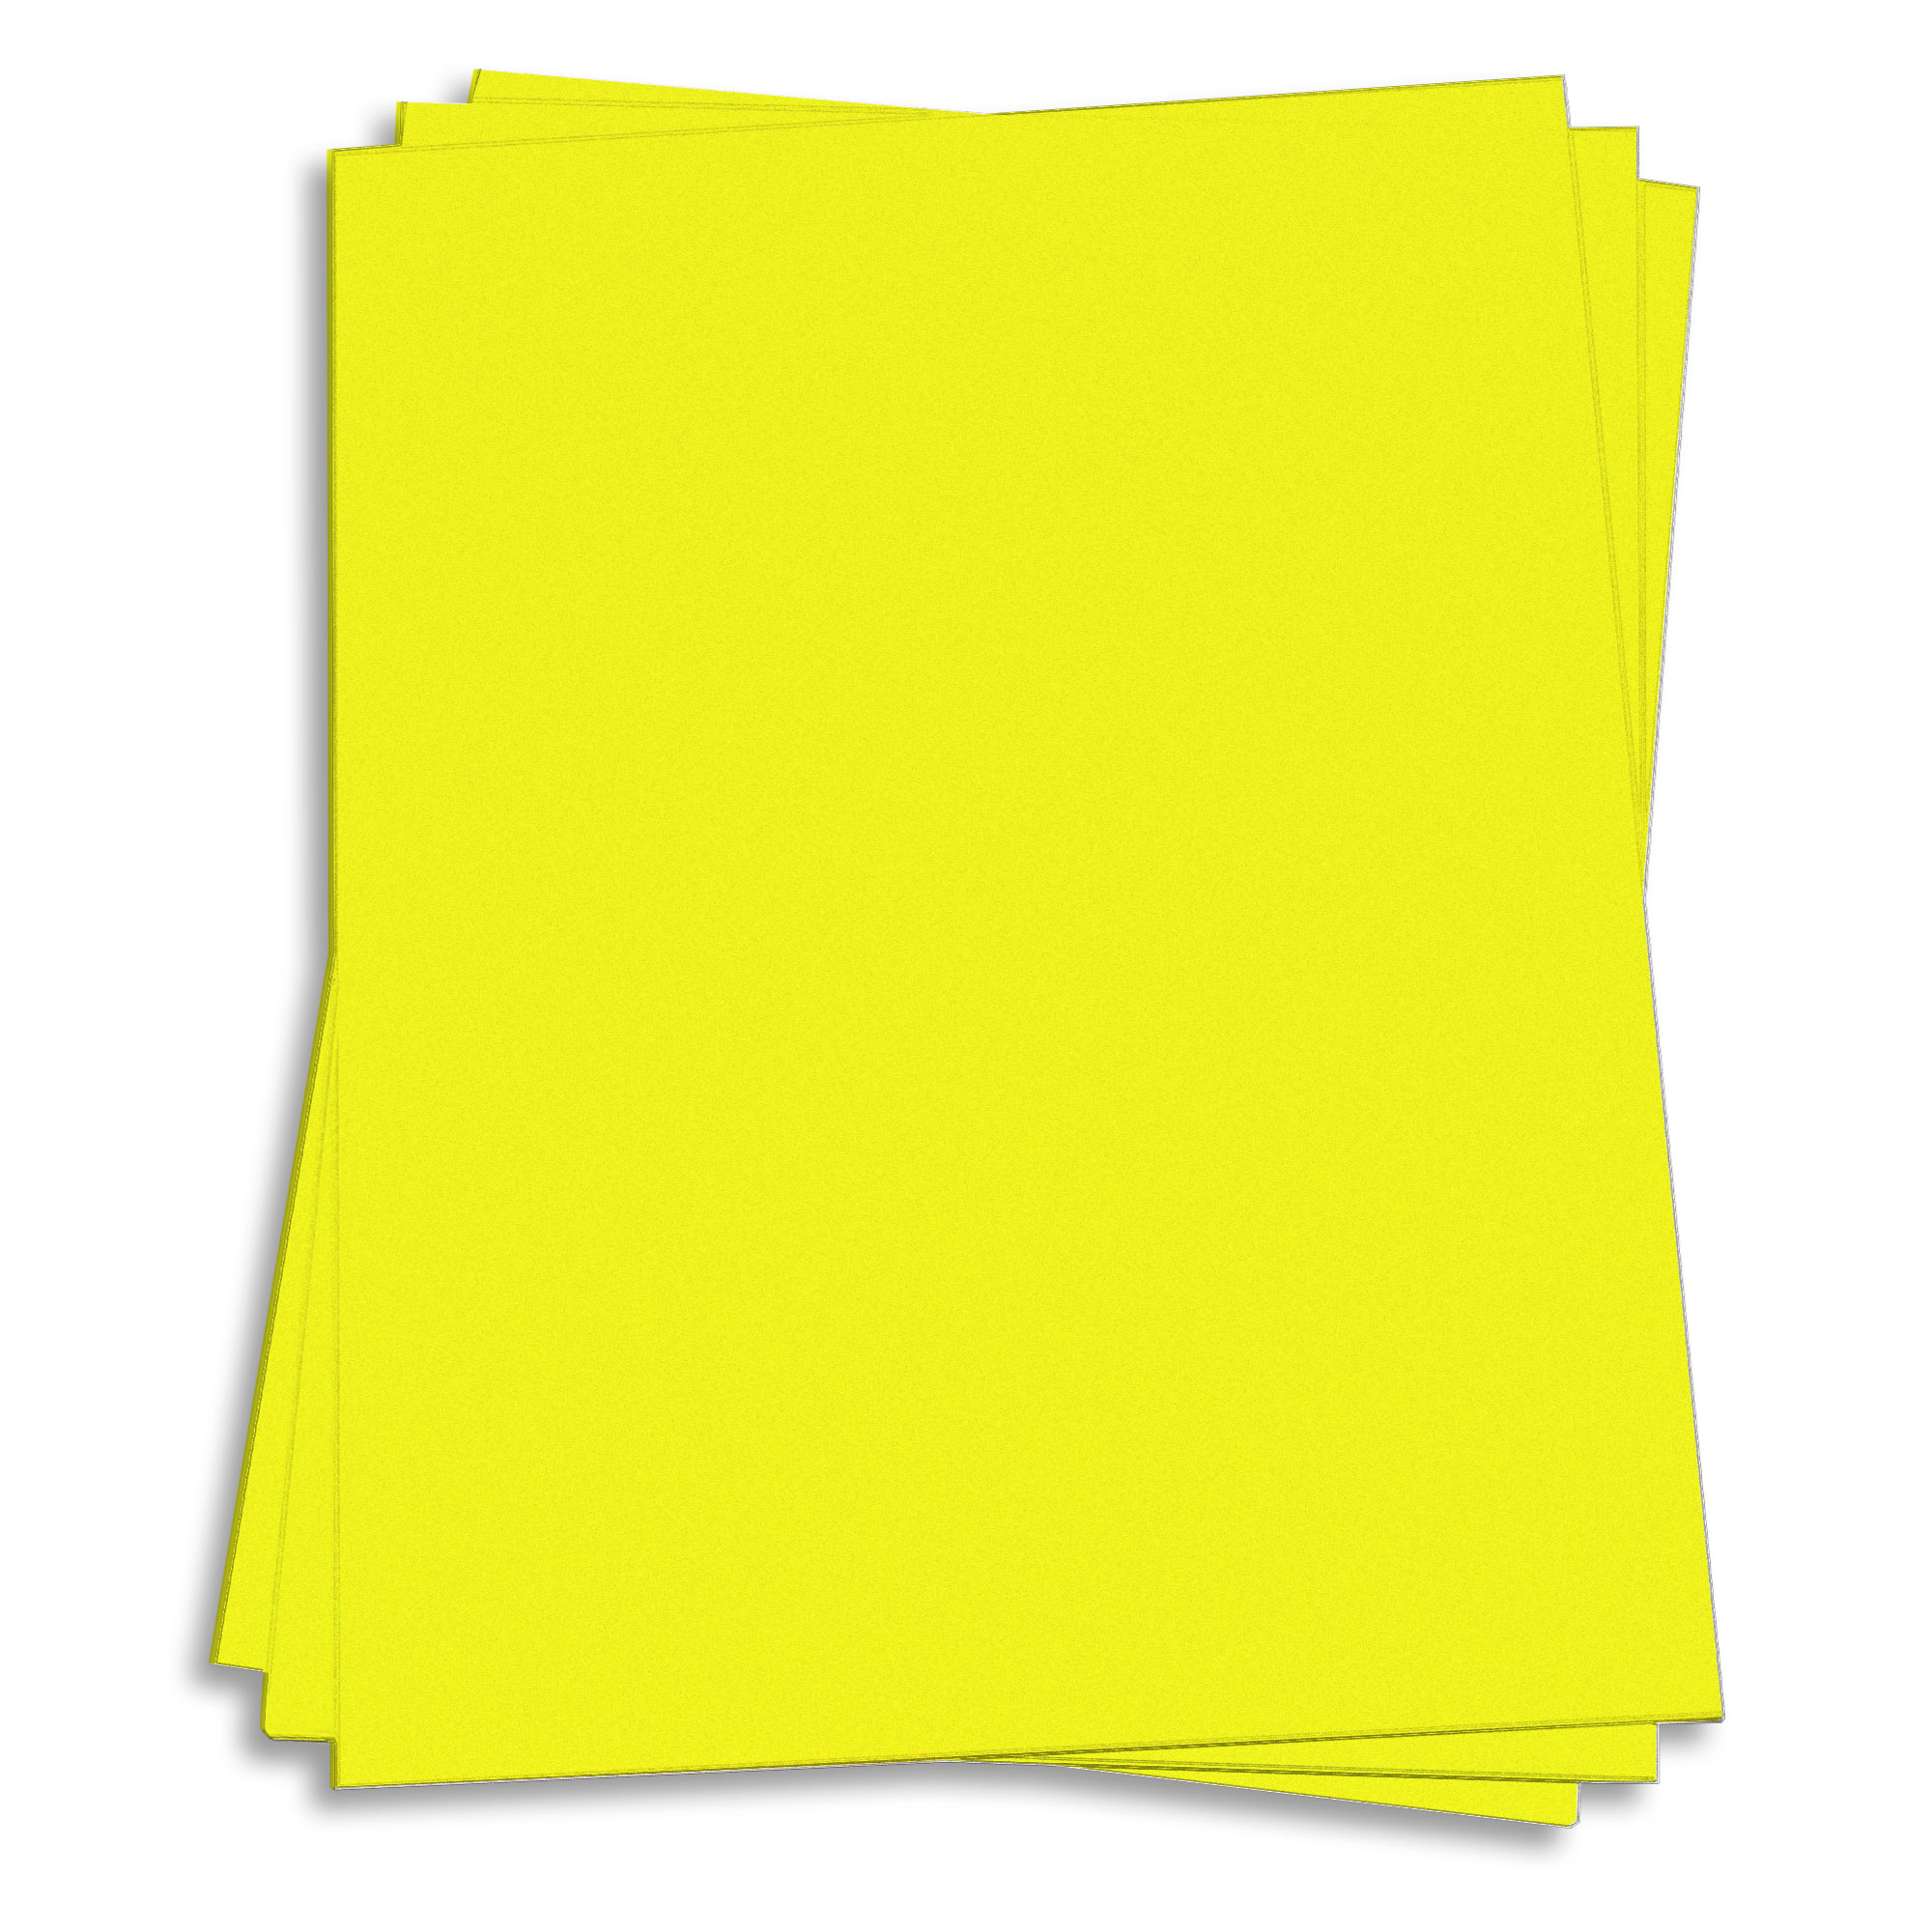 Lift-Off Lemon Yellow Card Stock - 8 1/2 x 11 65lb Cover